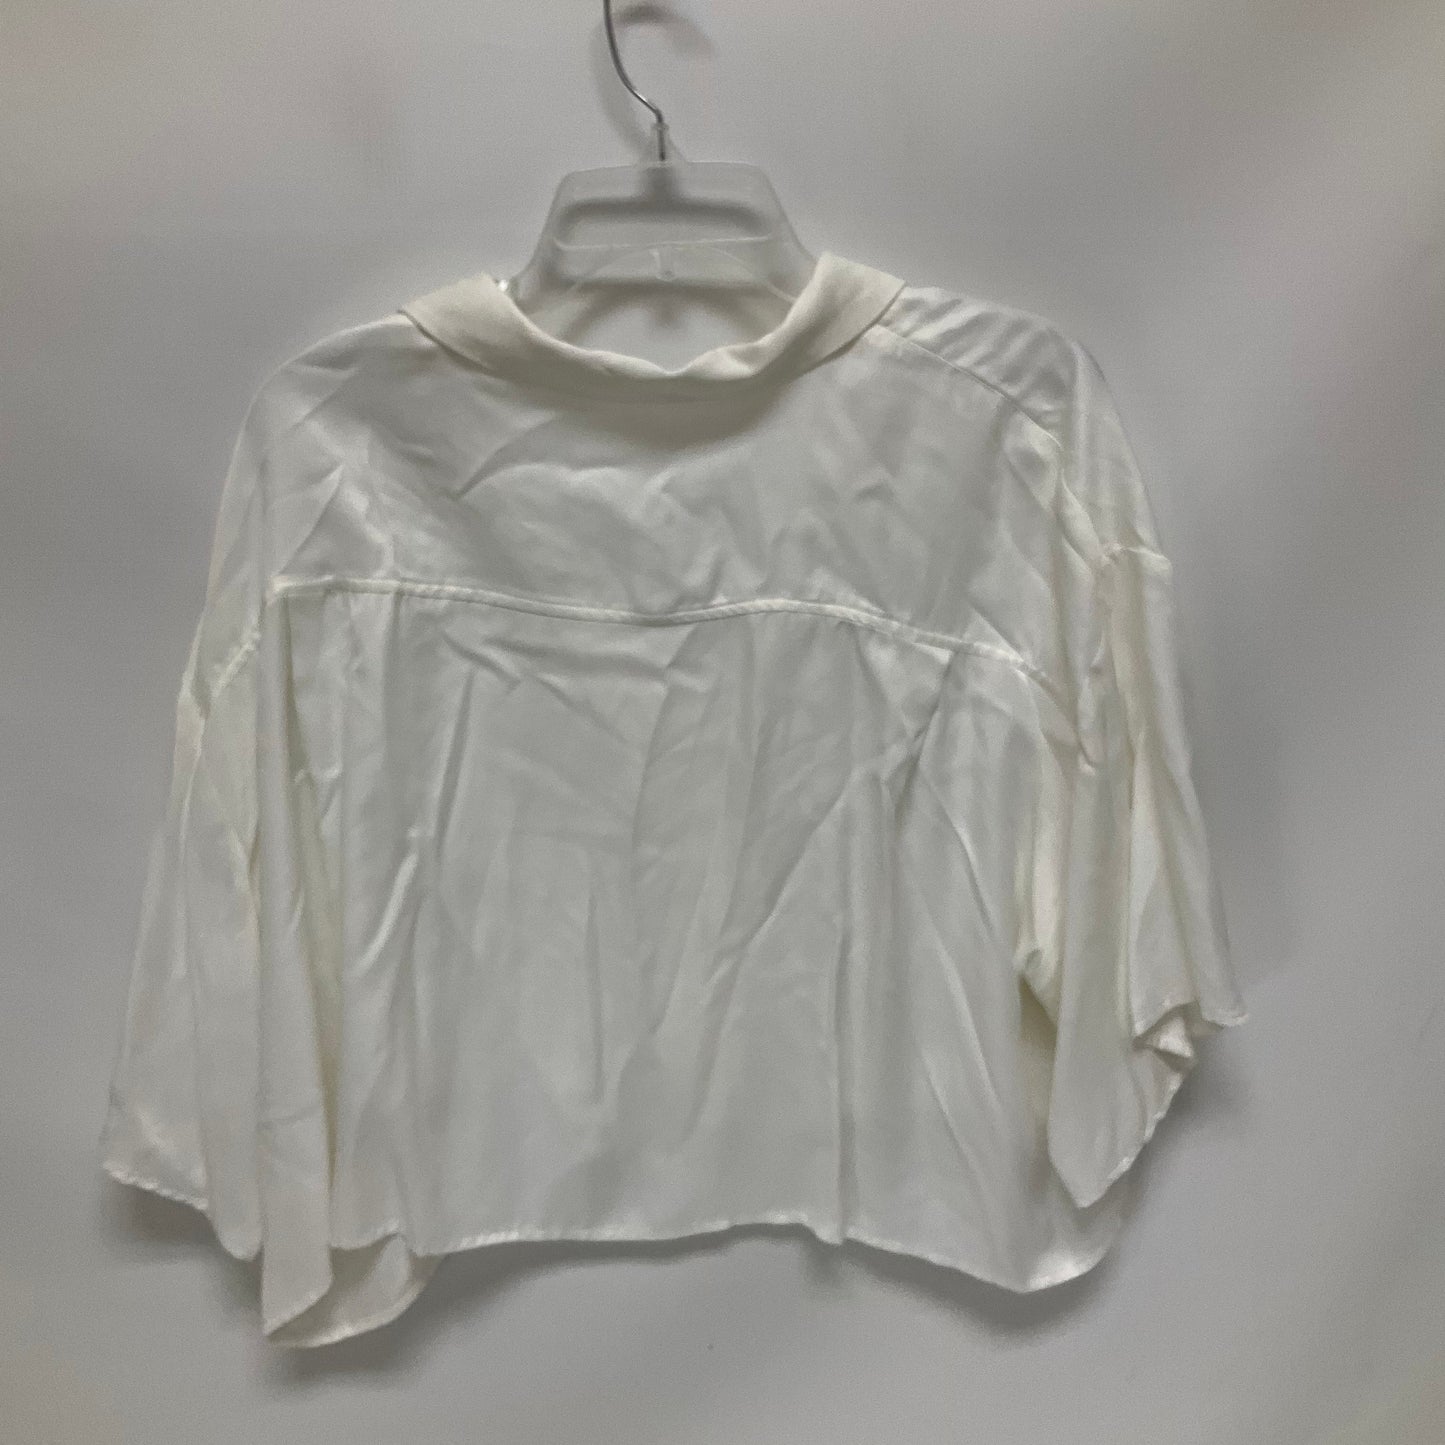 White Top Short Sleeve Zara, Size S